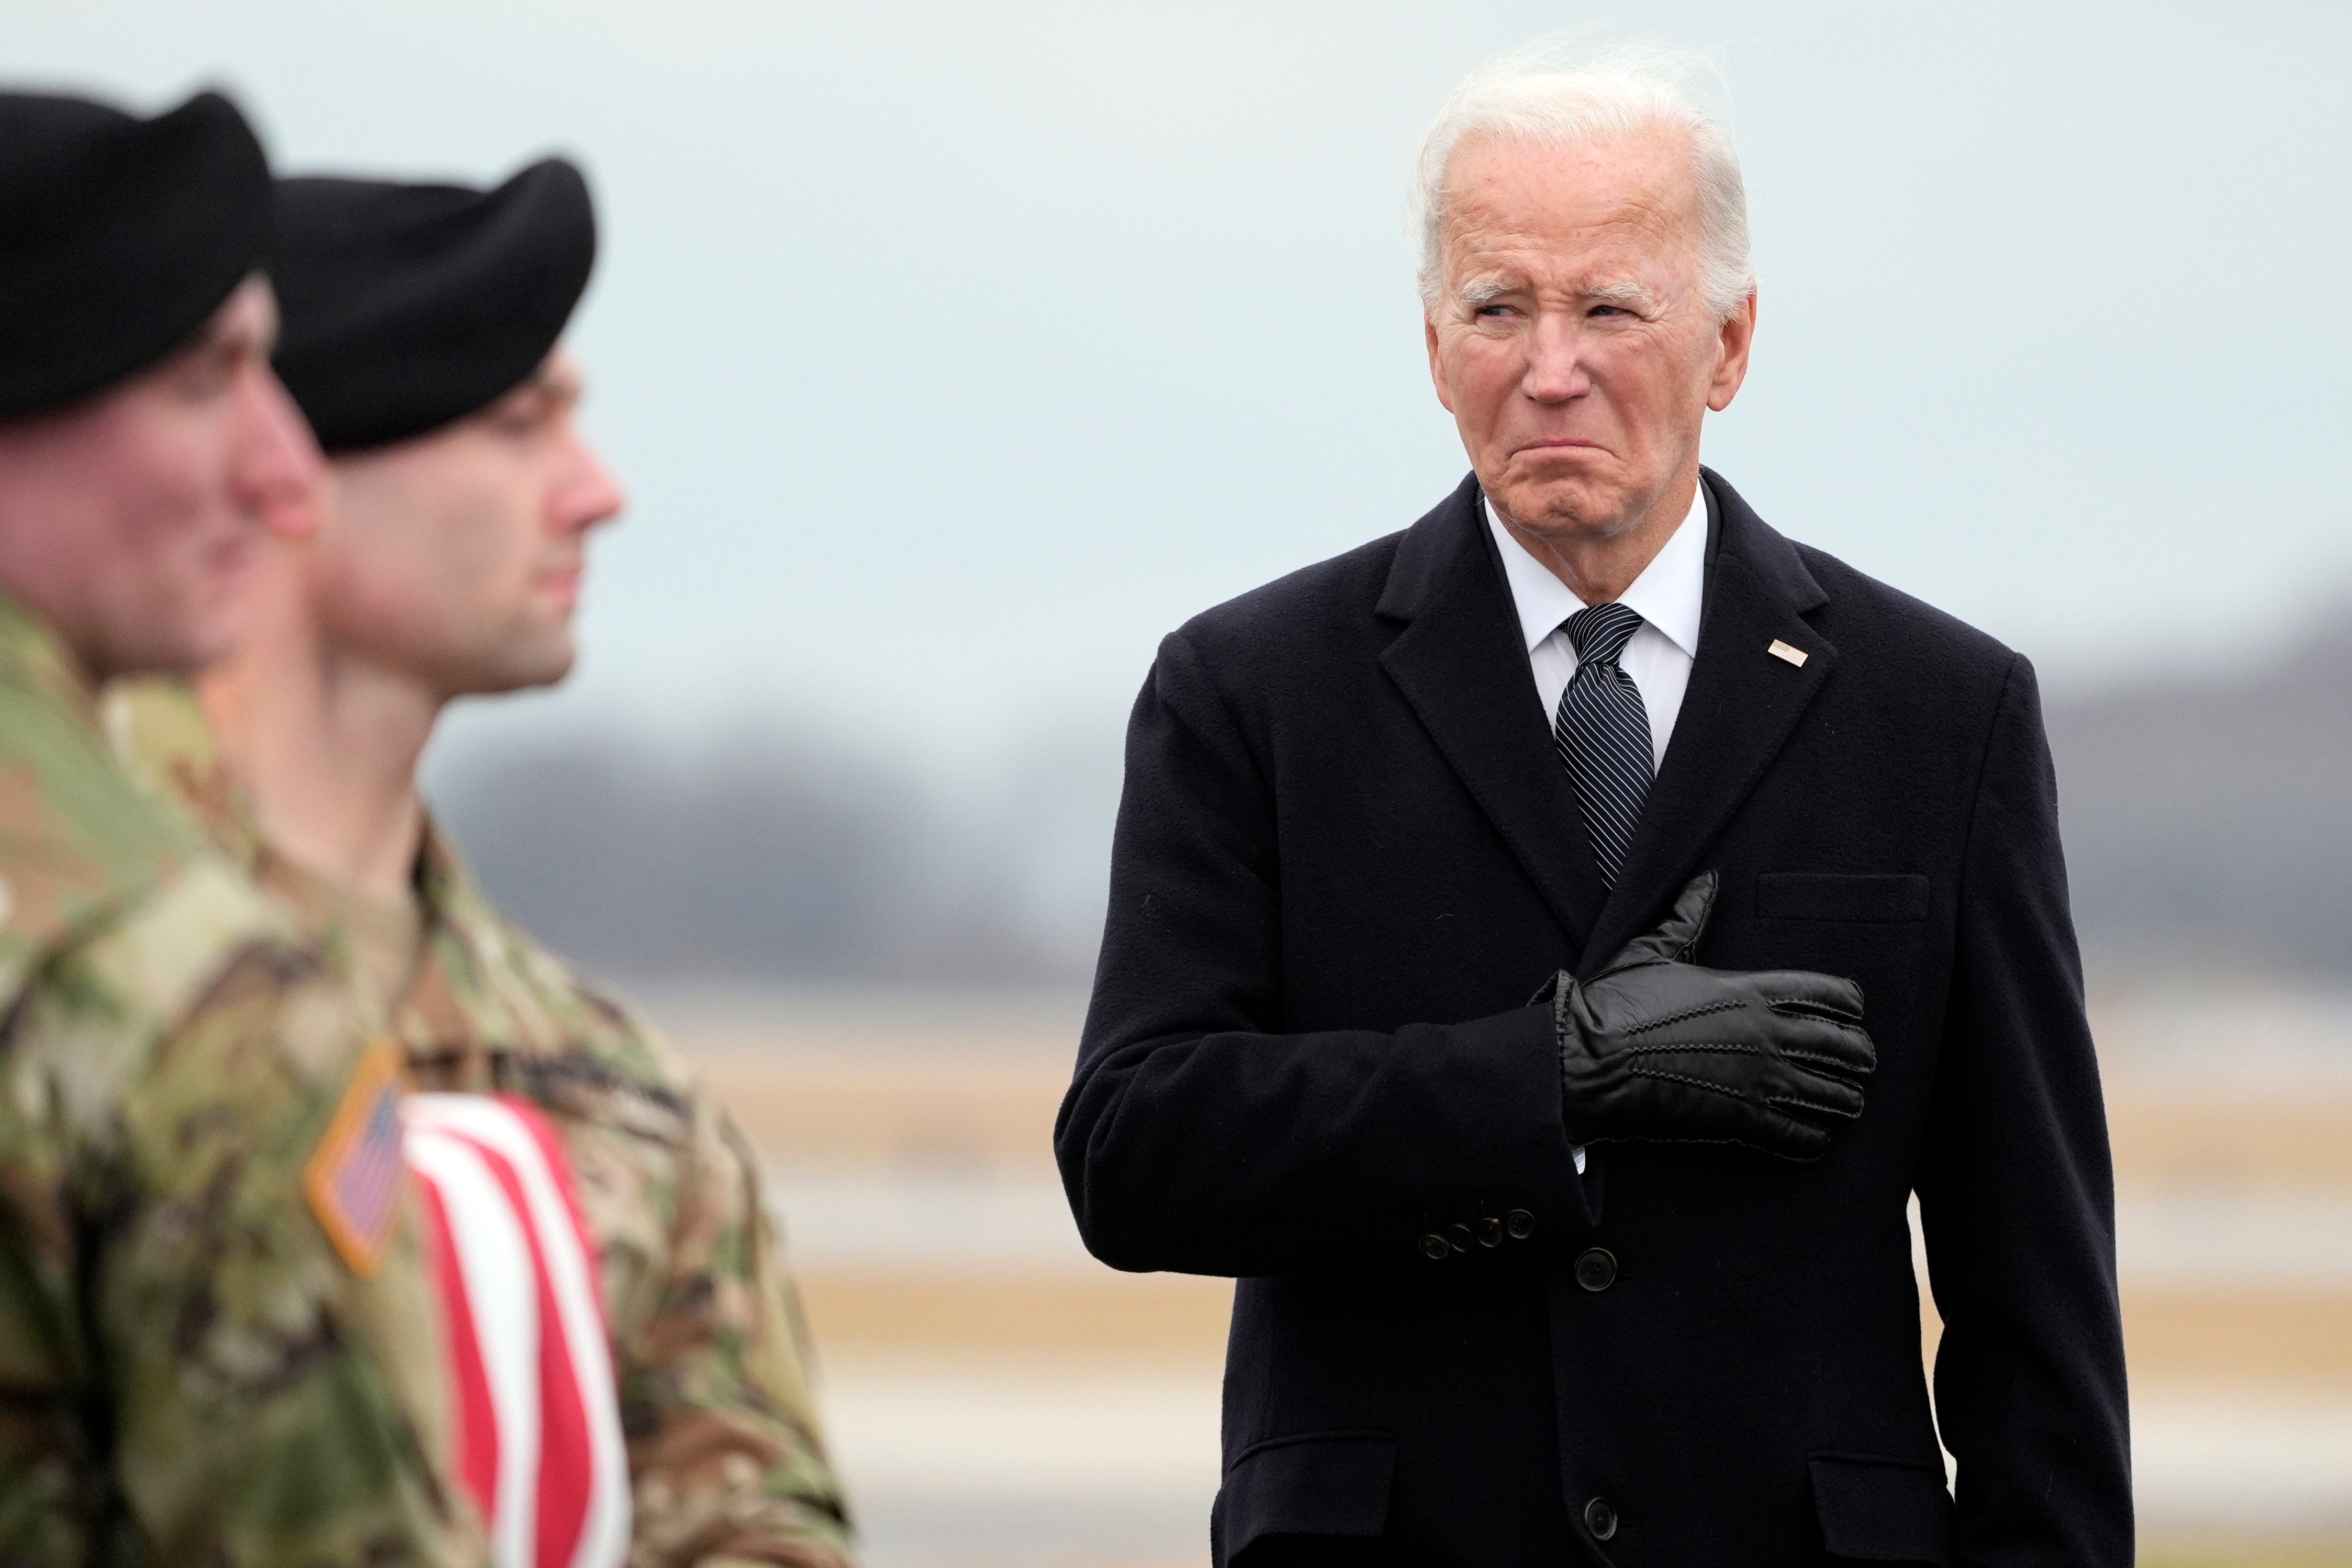 Joe Biden in Delaware as the bodies of the US soldiers killed in Jordan are returned home